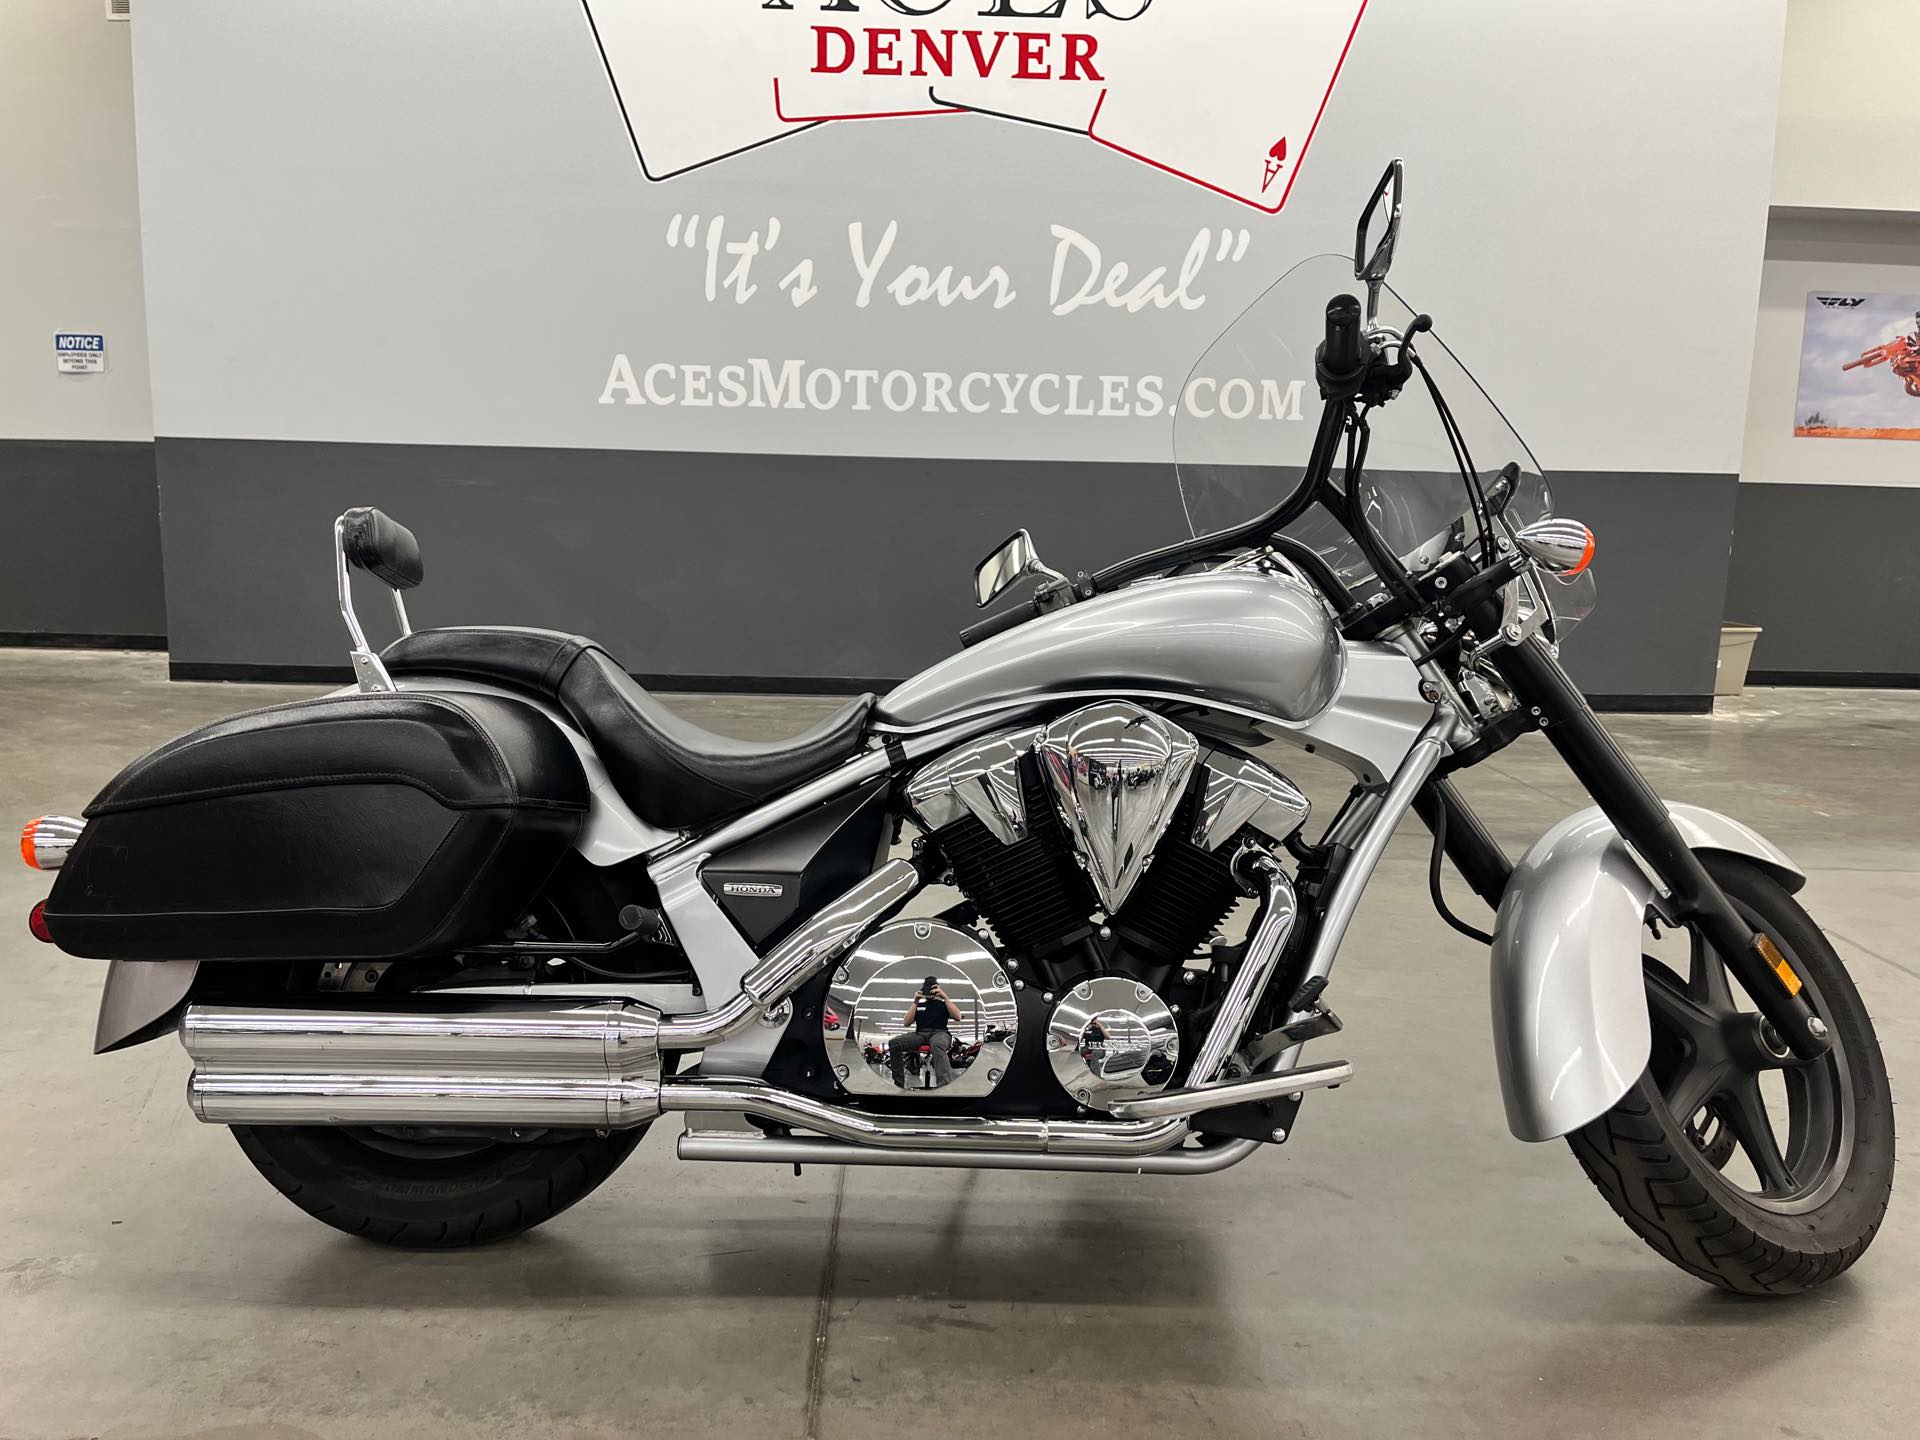 2013 Honda Interstate Base at Aces Motorcycles - Denver